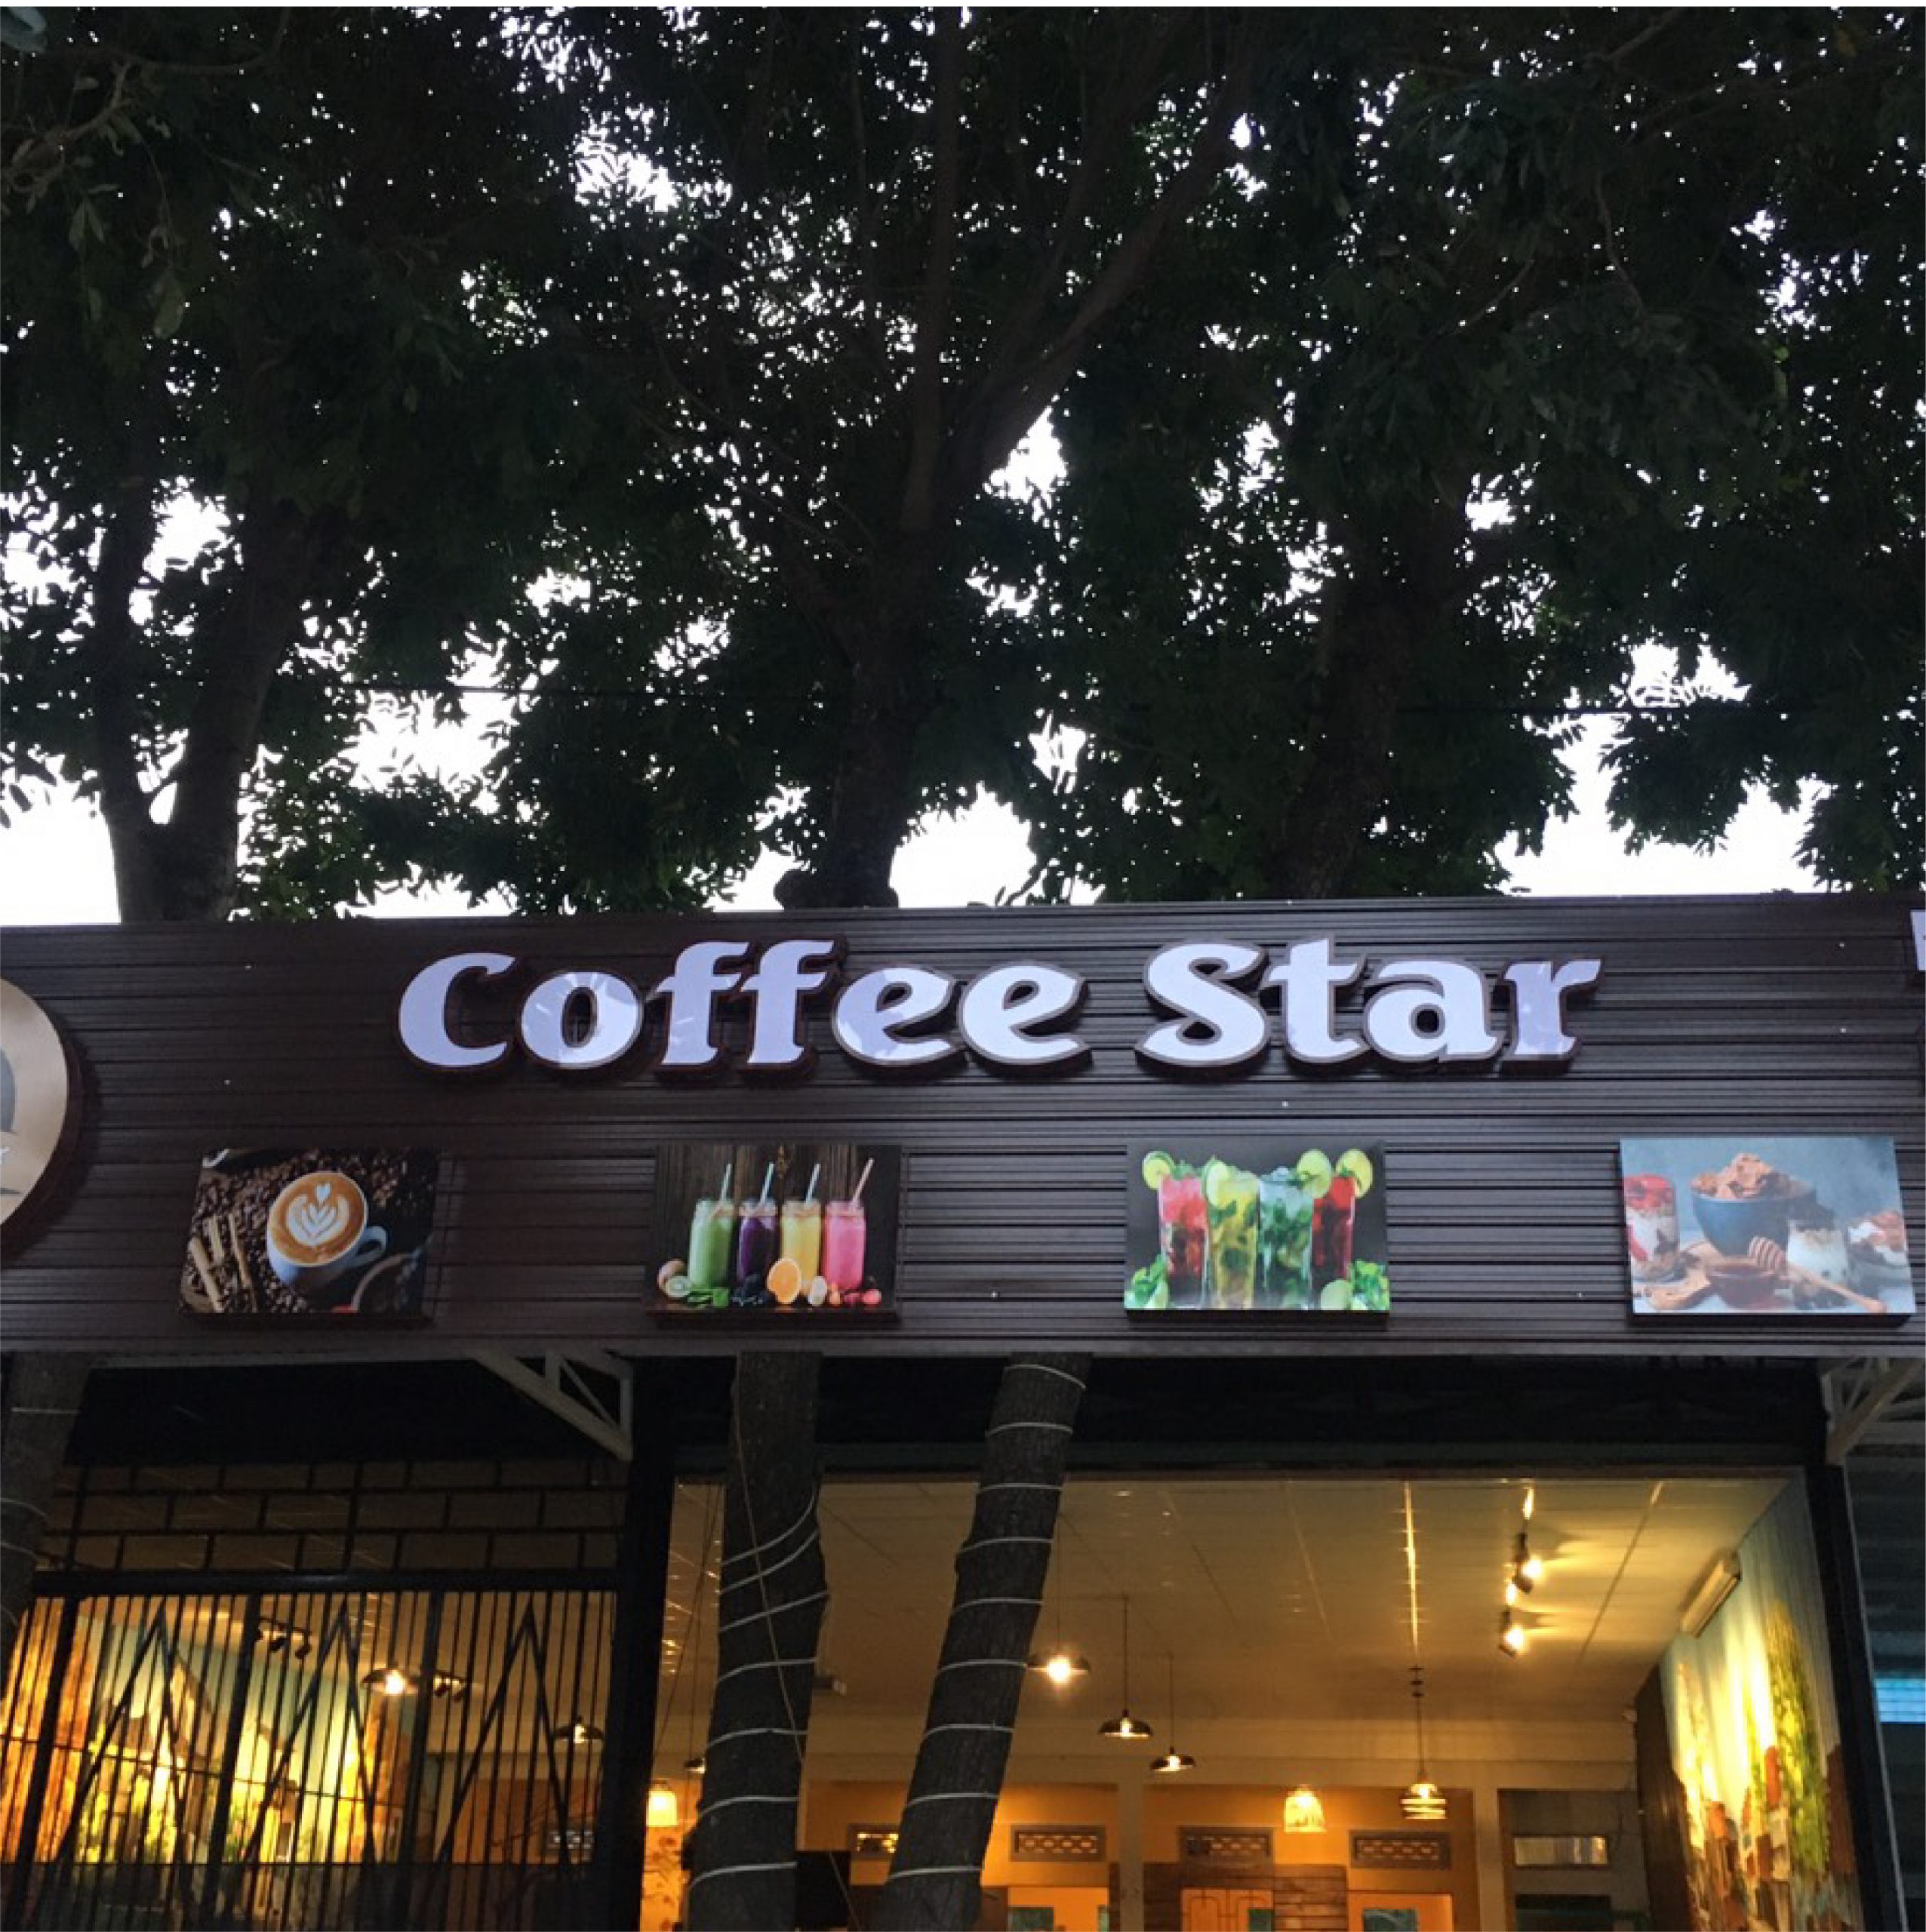 Coffee star